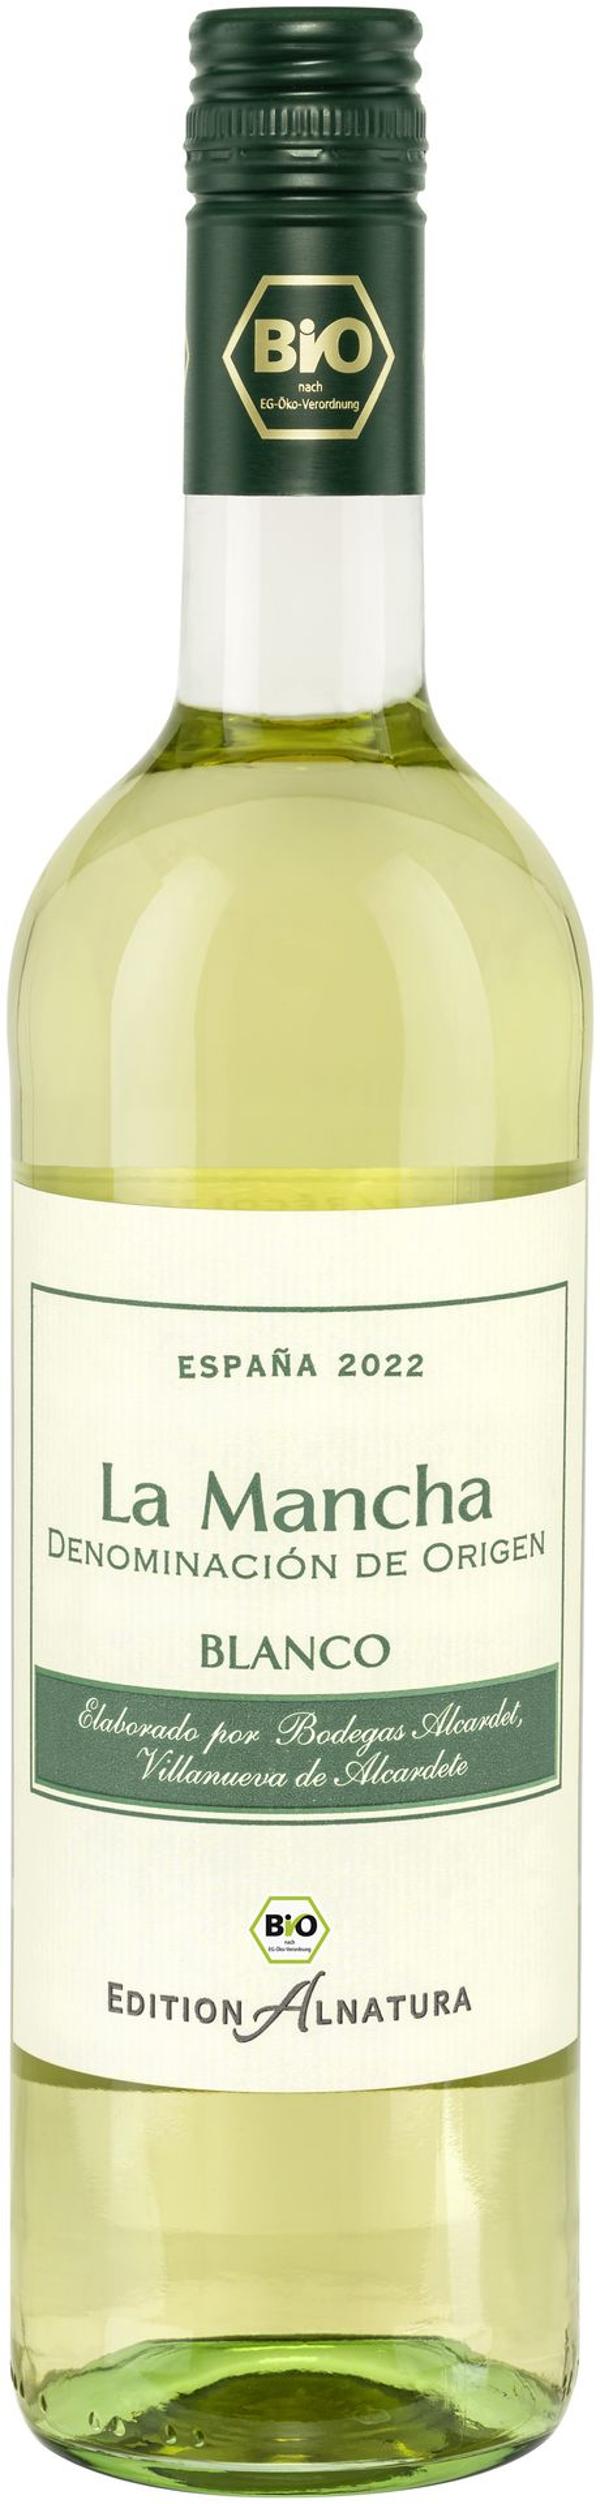 Produktfoto zu La Mancha Blanco 0,75 l Alnatura